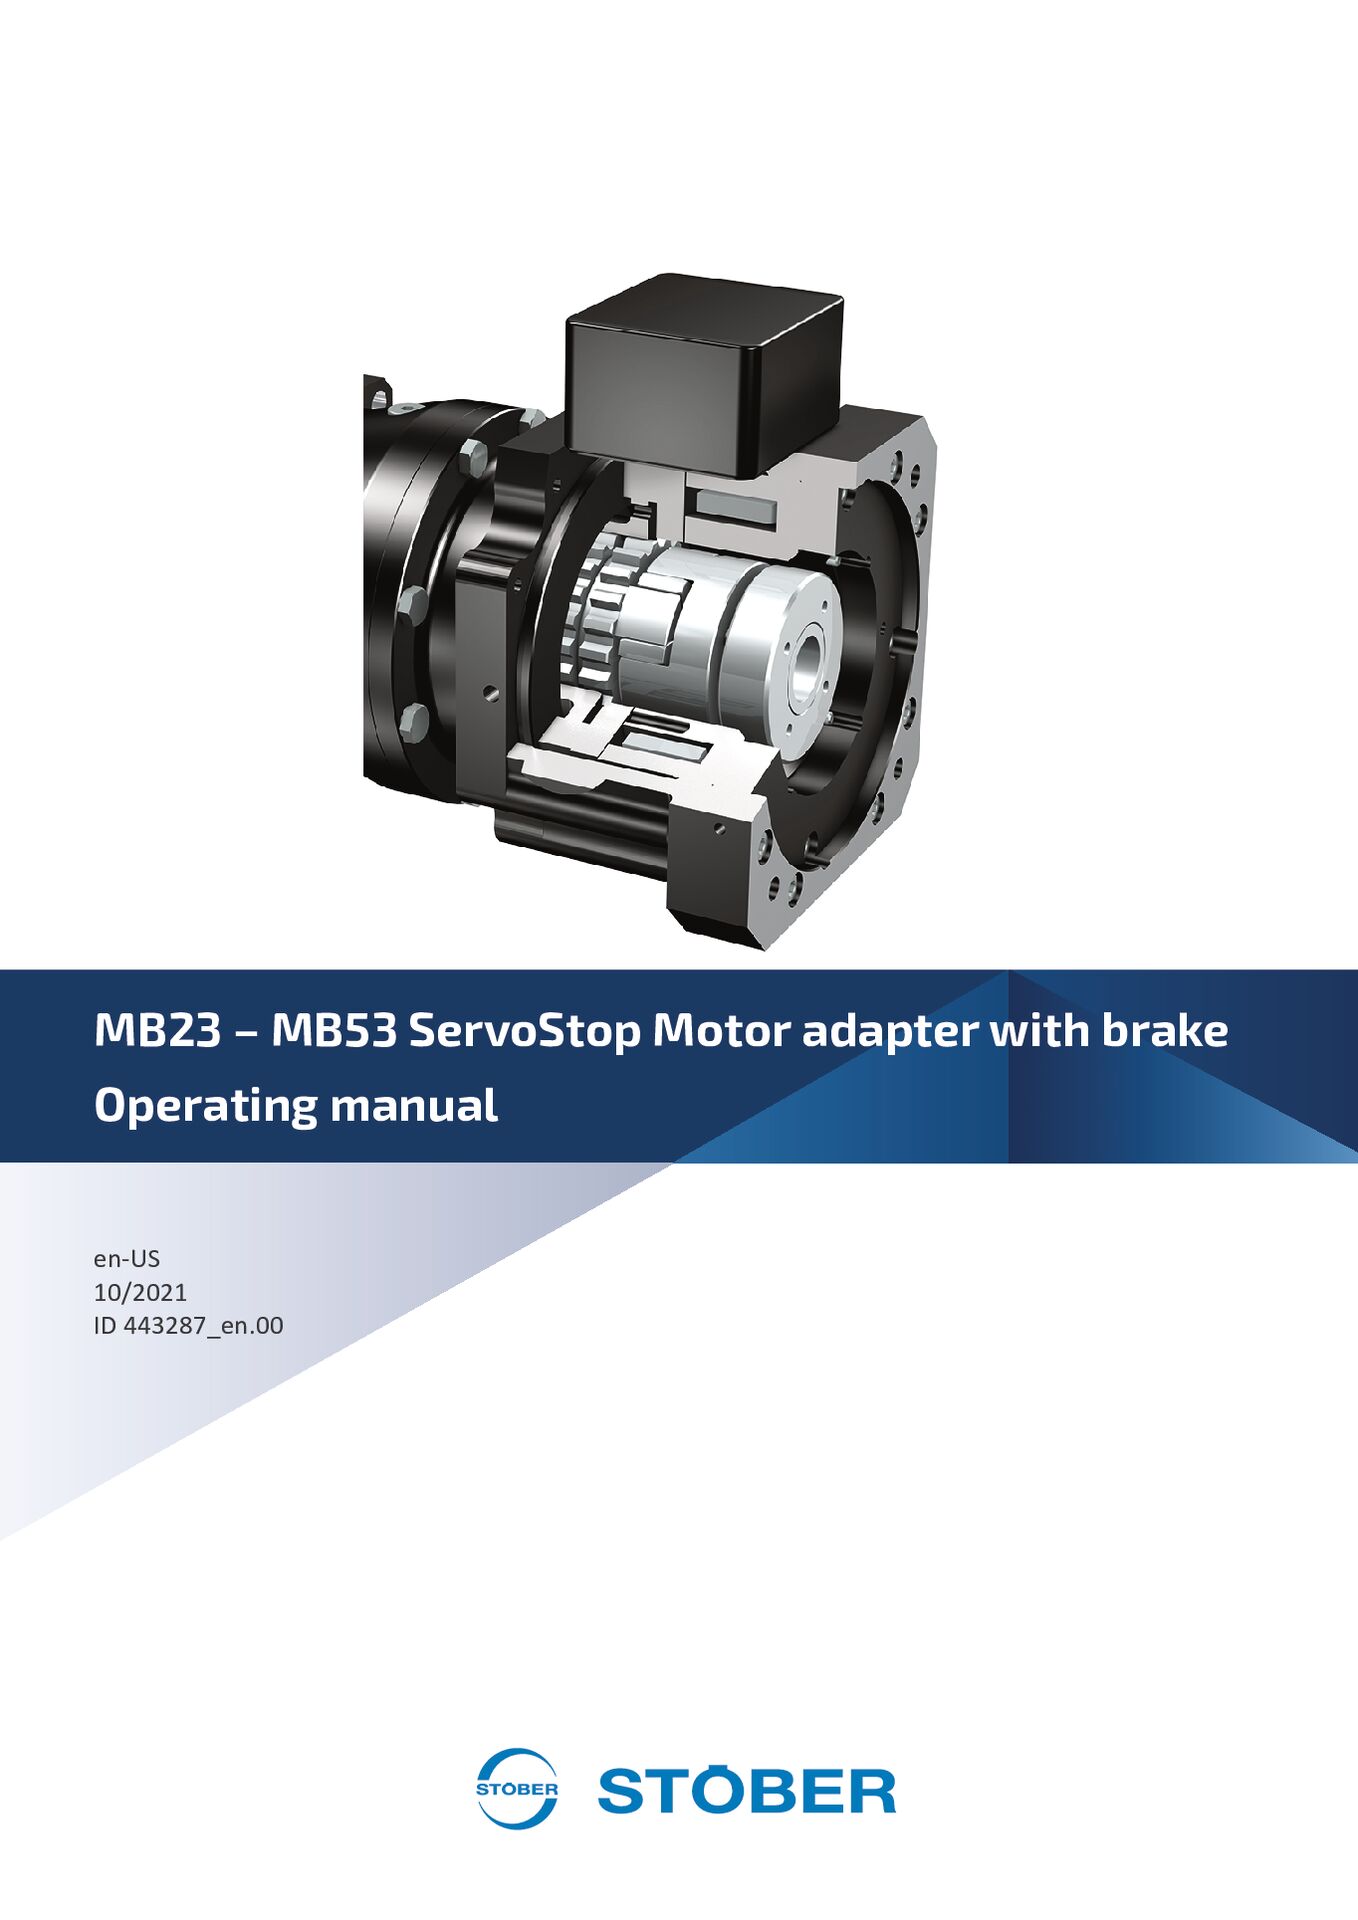 Operating manual MB23 - MB53 ServoStop Motor adapter with brake